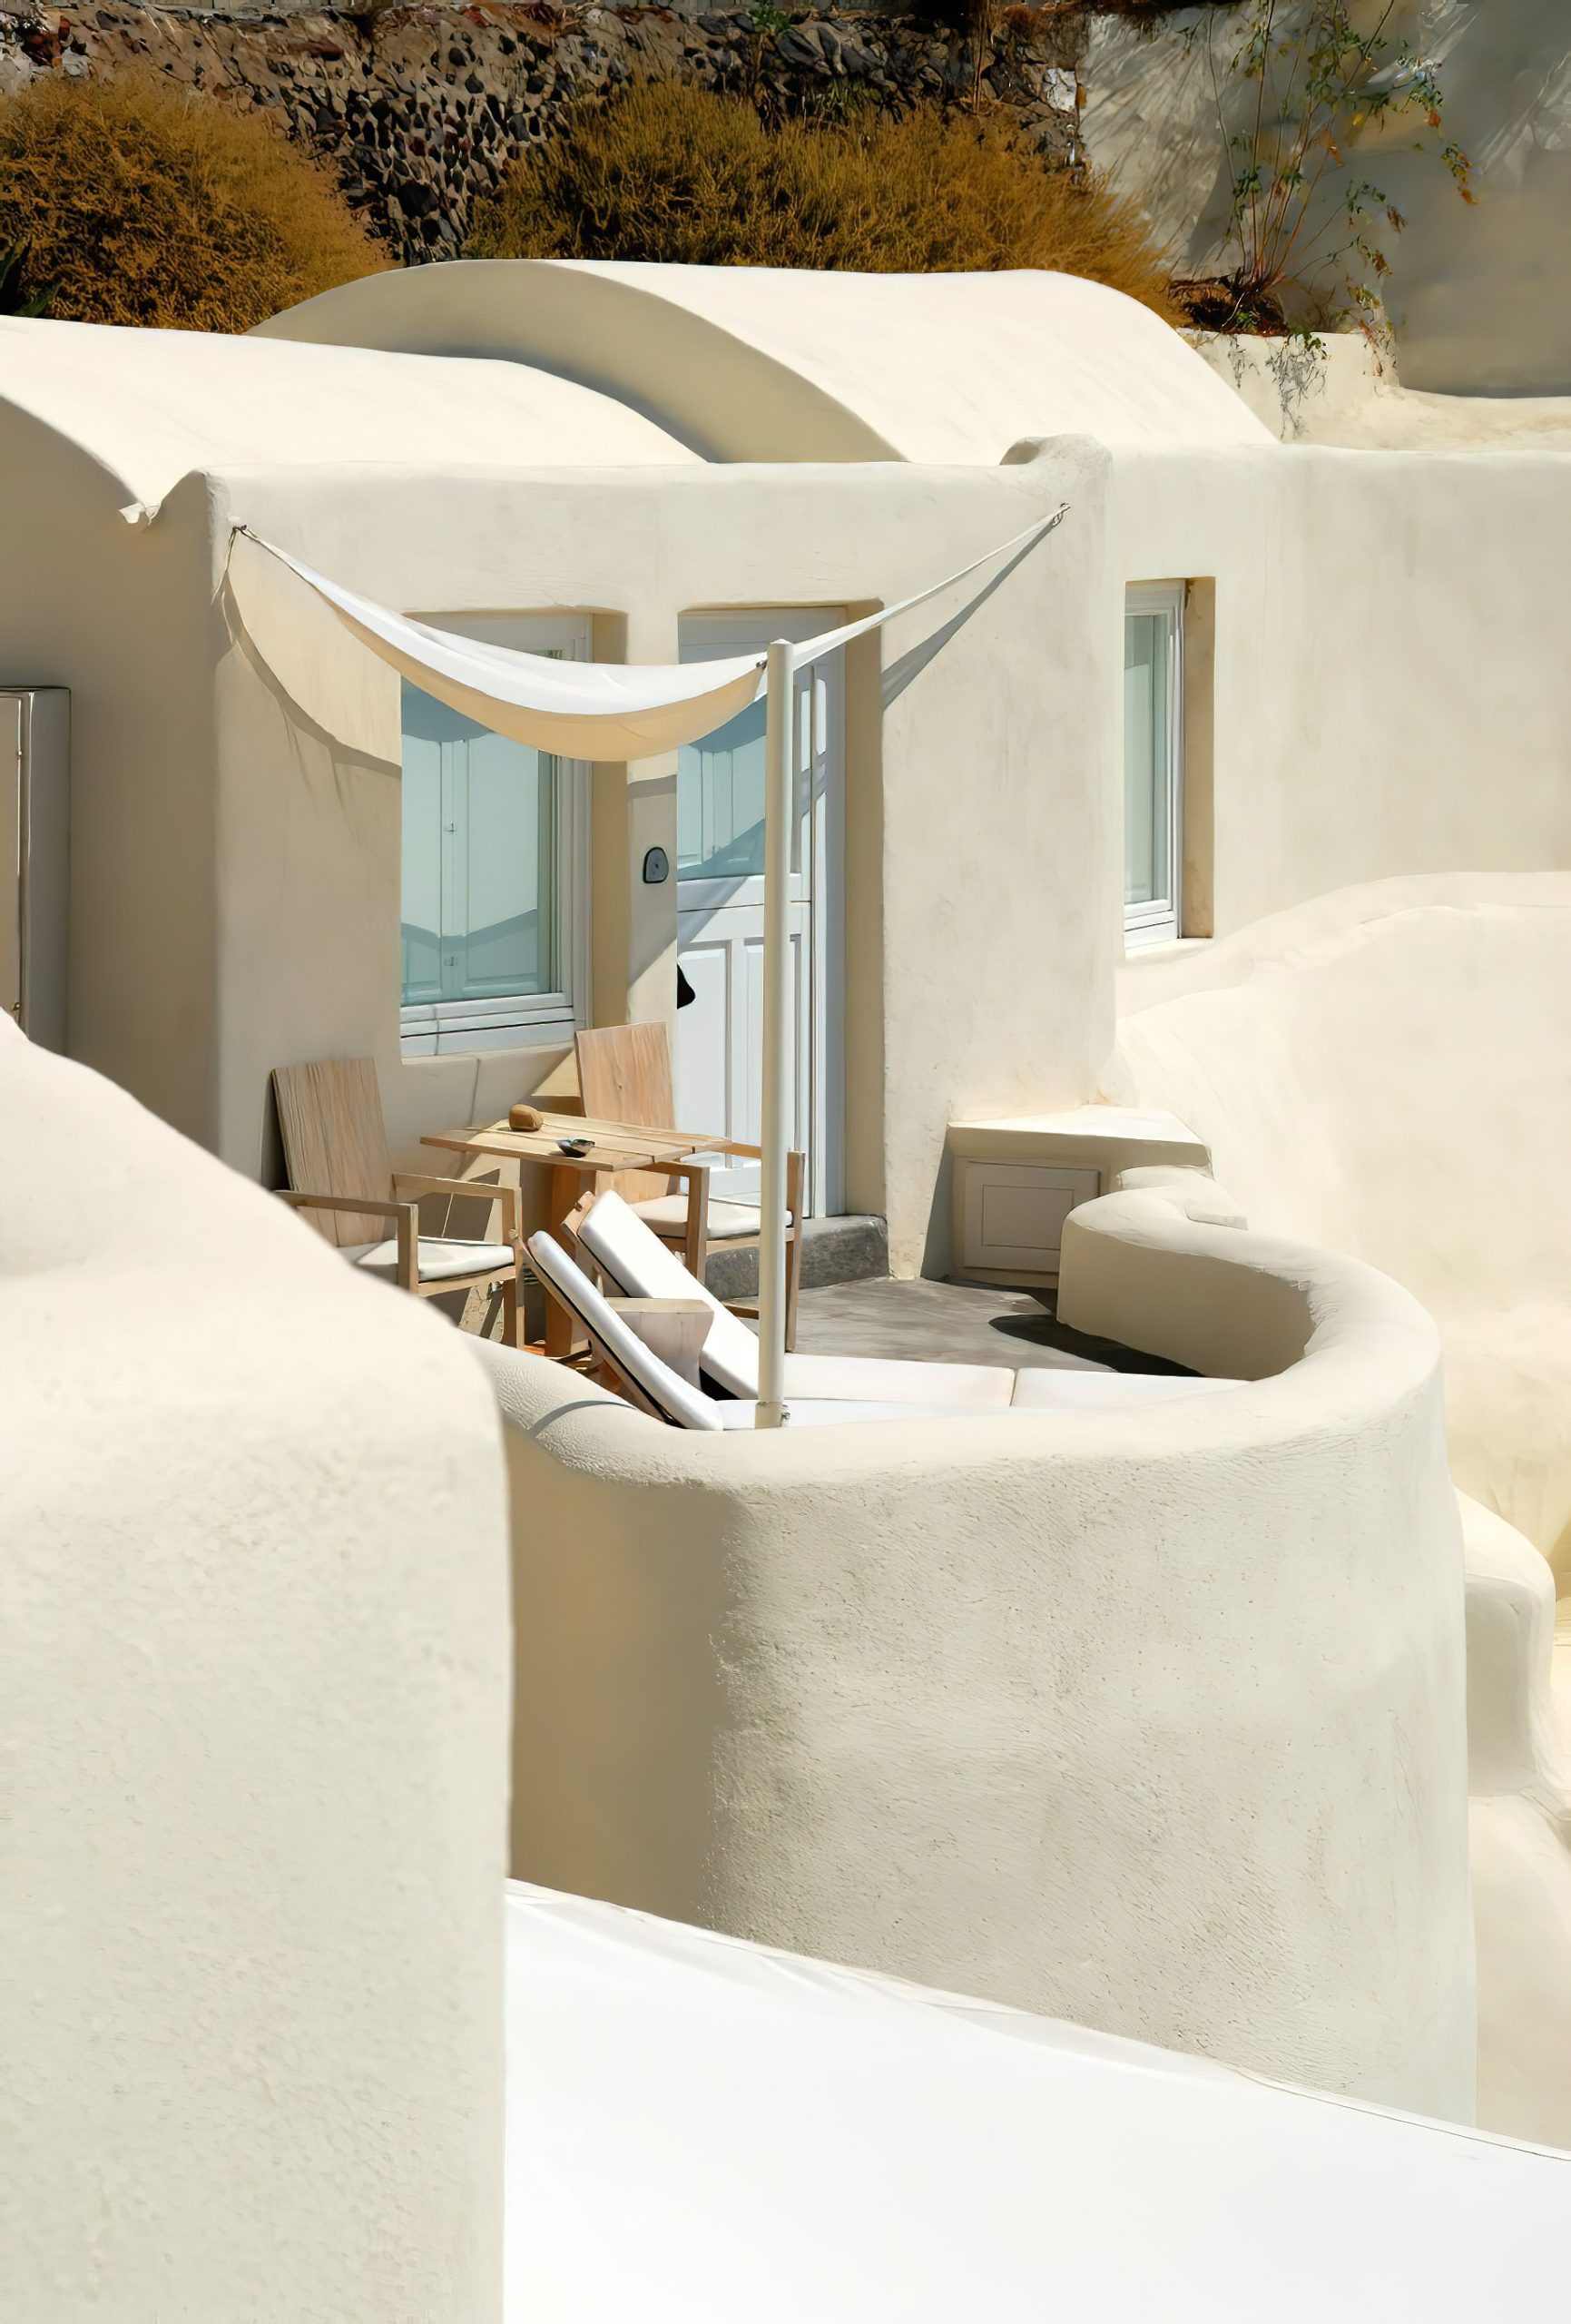 Mystique Hotel Santorini – Oia, Santorini Island, Greece – Clifftop Balcony